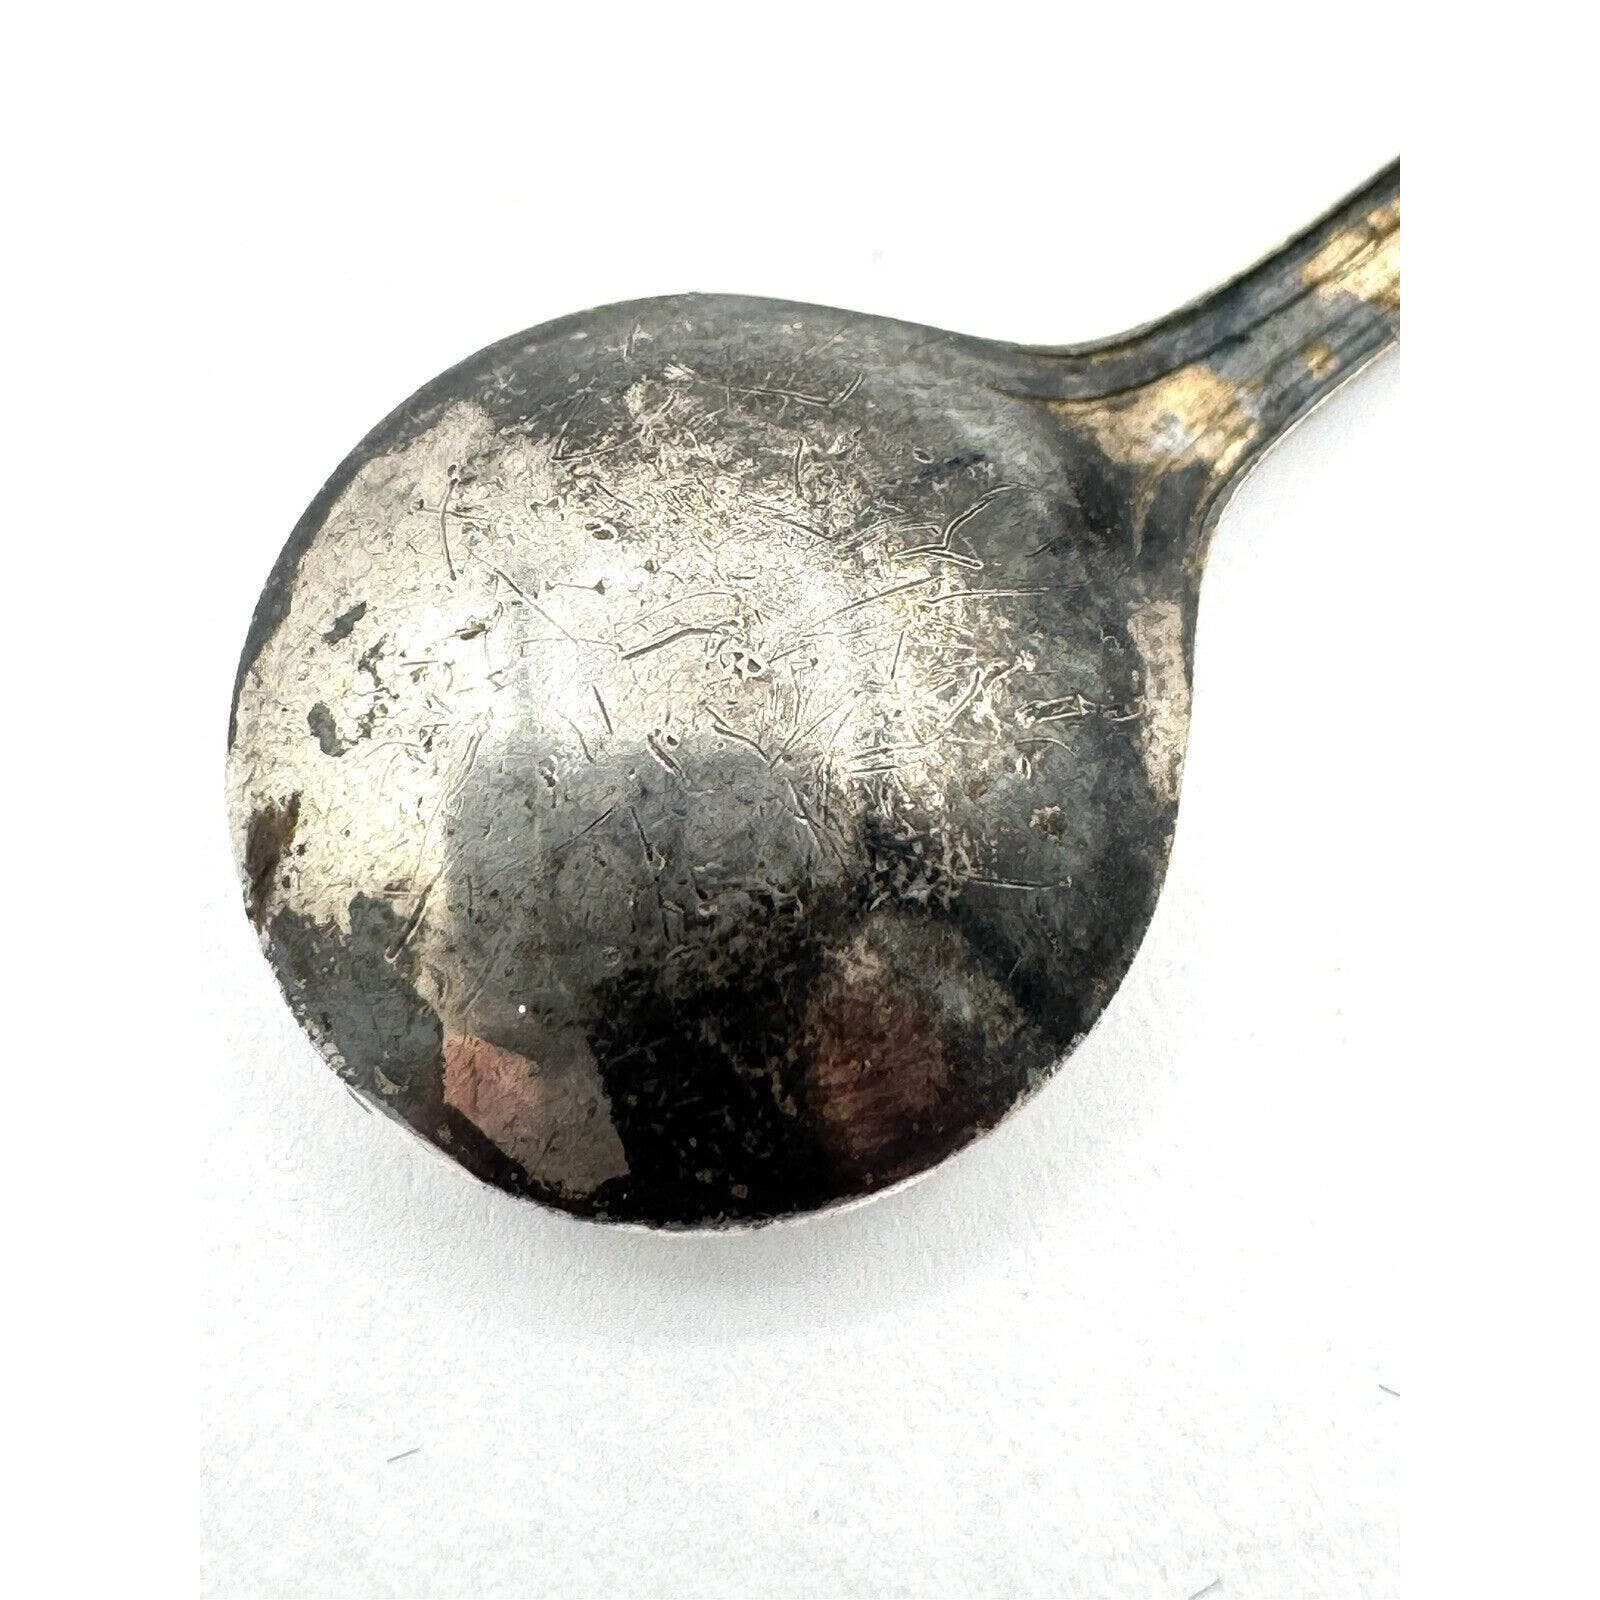 UnbrandedVintage Antique Sterling Silver Spoon Brooch Pin 3.9 Grams Beautiful - Black Dog Vintage